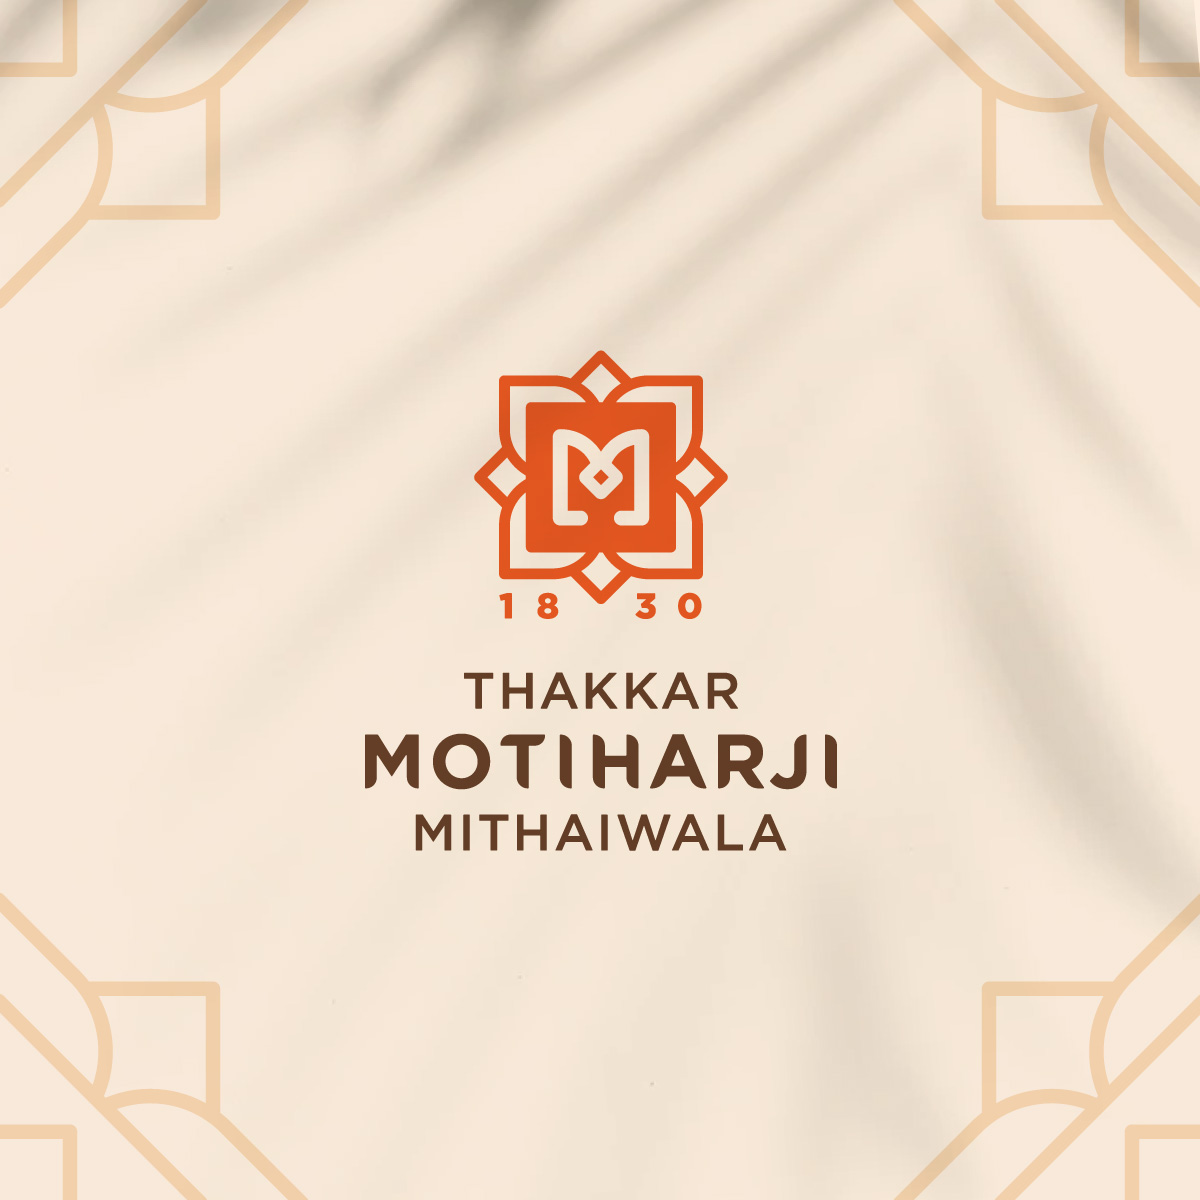 Thakkar Motiharji Mithaiwala